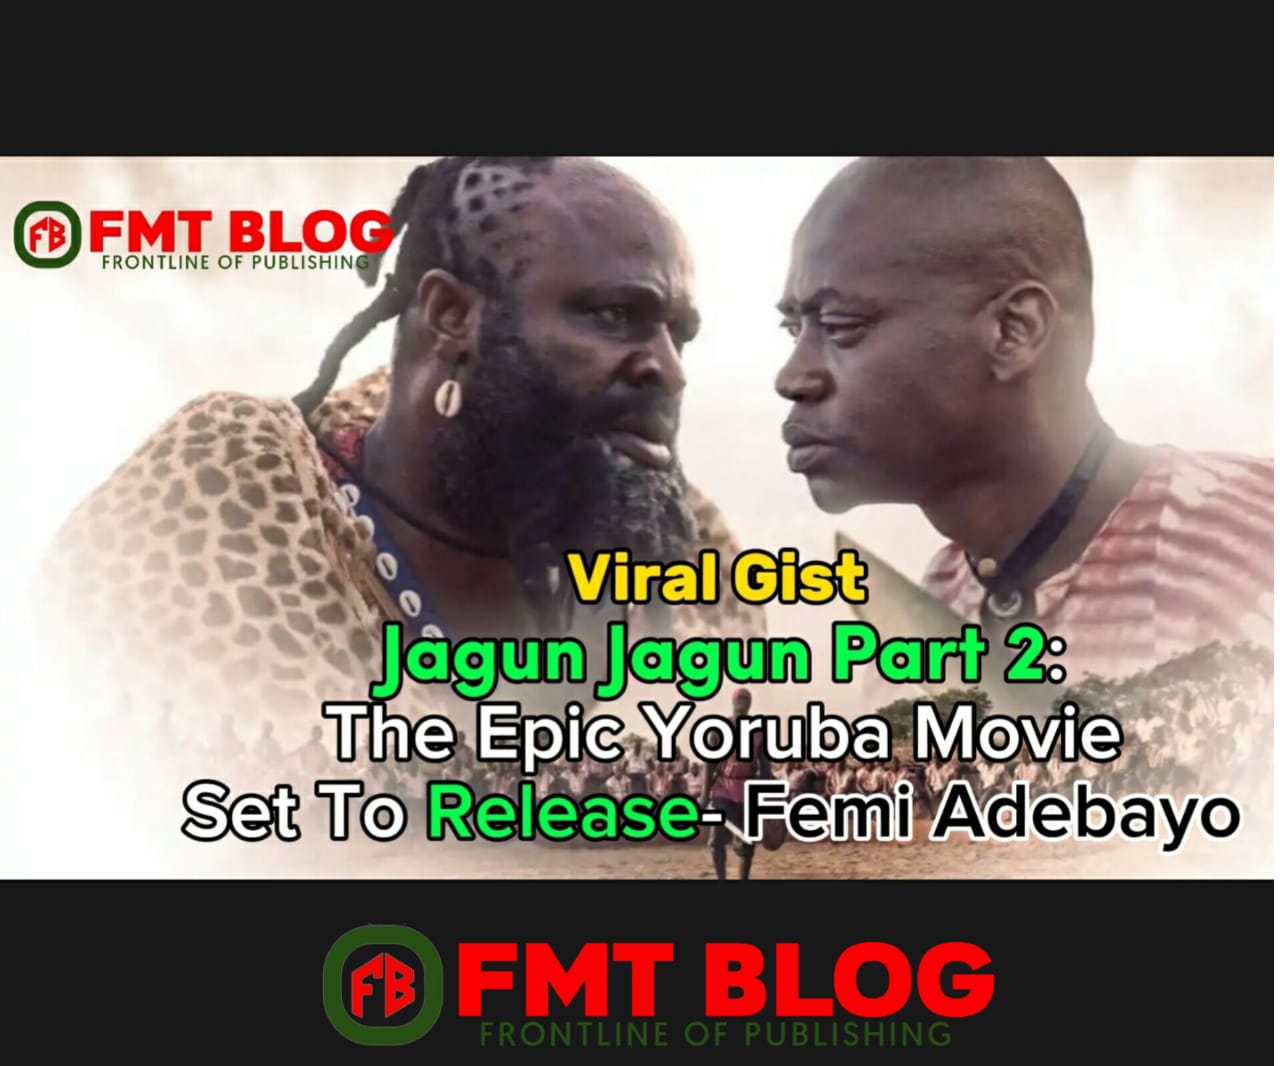 Jagun Jagun Part 2: The Epic Yoruba Movie Sets To Release- Femi Adebayo